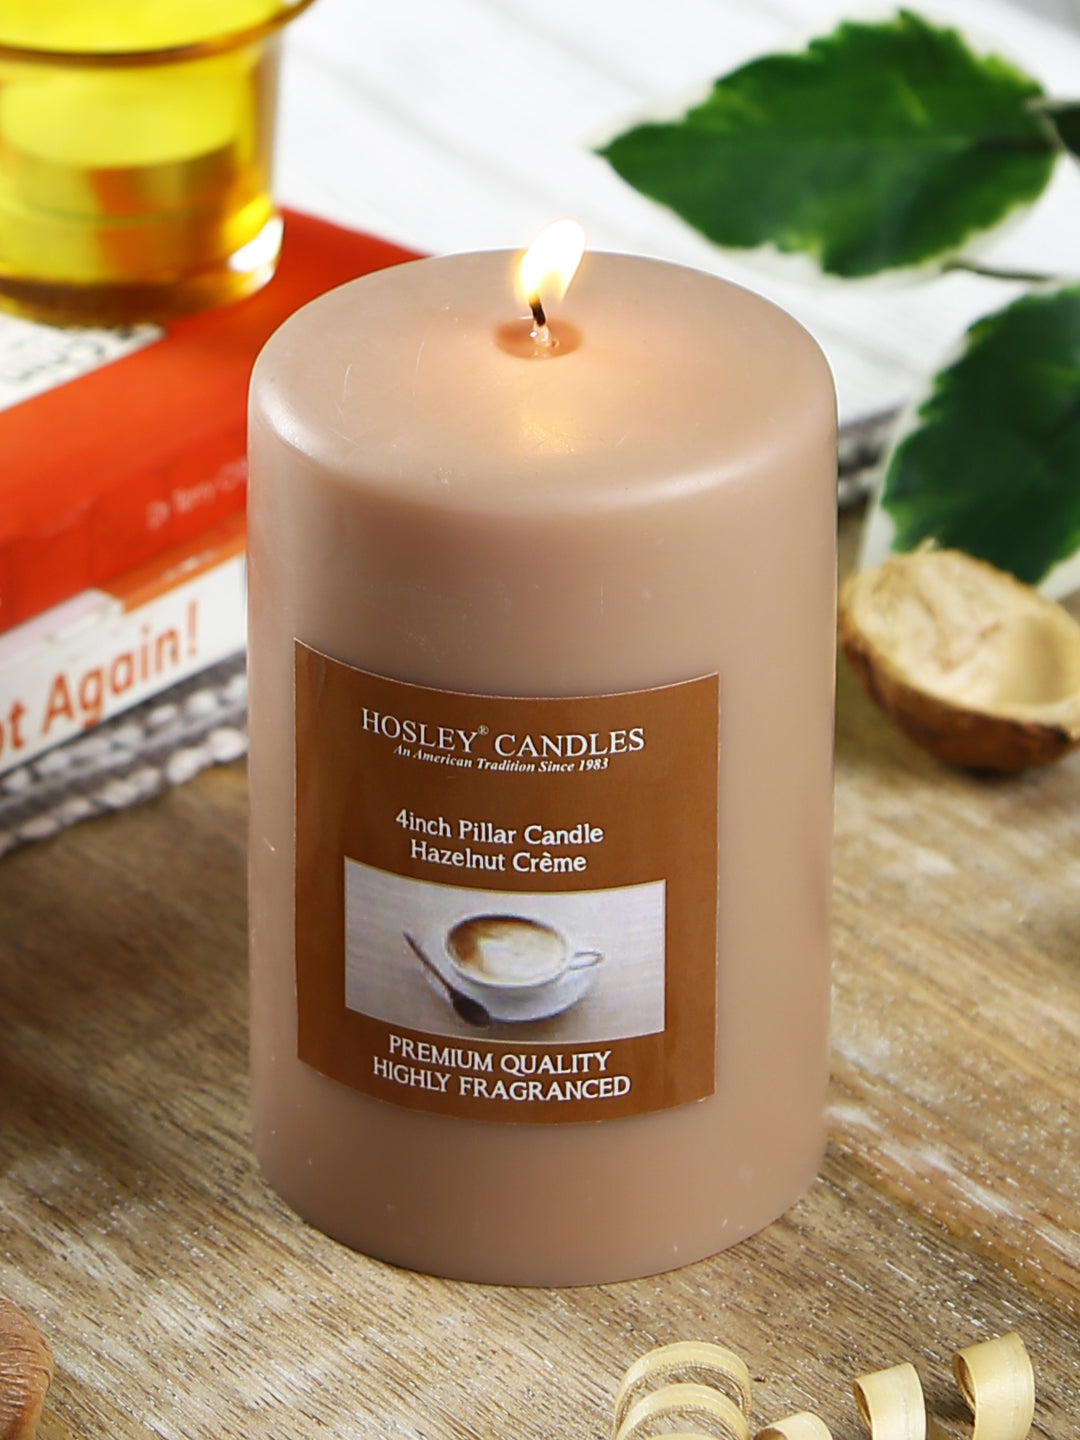 Hosley® Hazelnut Creme Highly Fragranced 4inch Pillar Candle